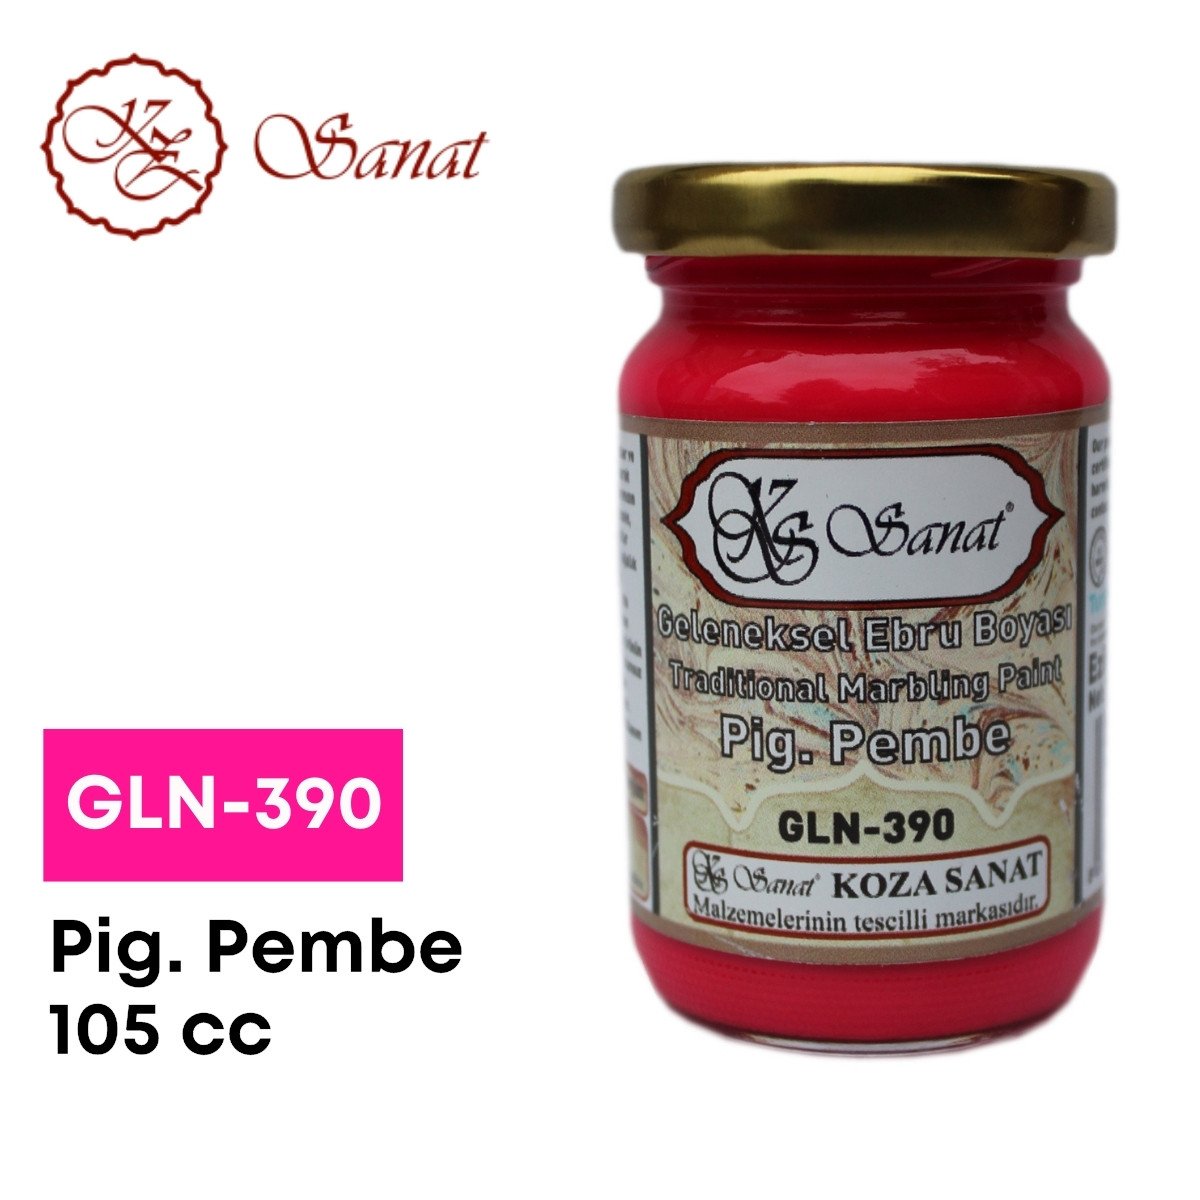 Koza Sanat Geleneksel Ebru Boyası 105cc GLN-390 Pigment Pembe